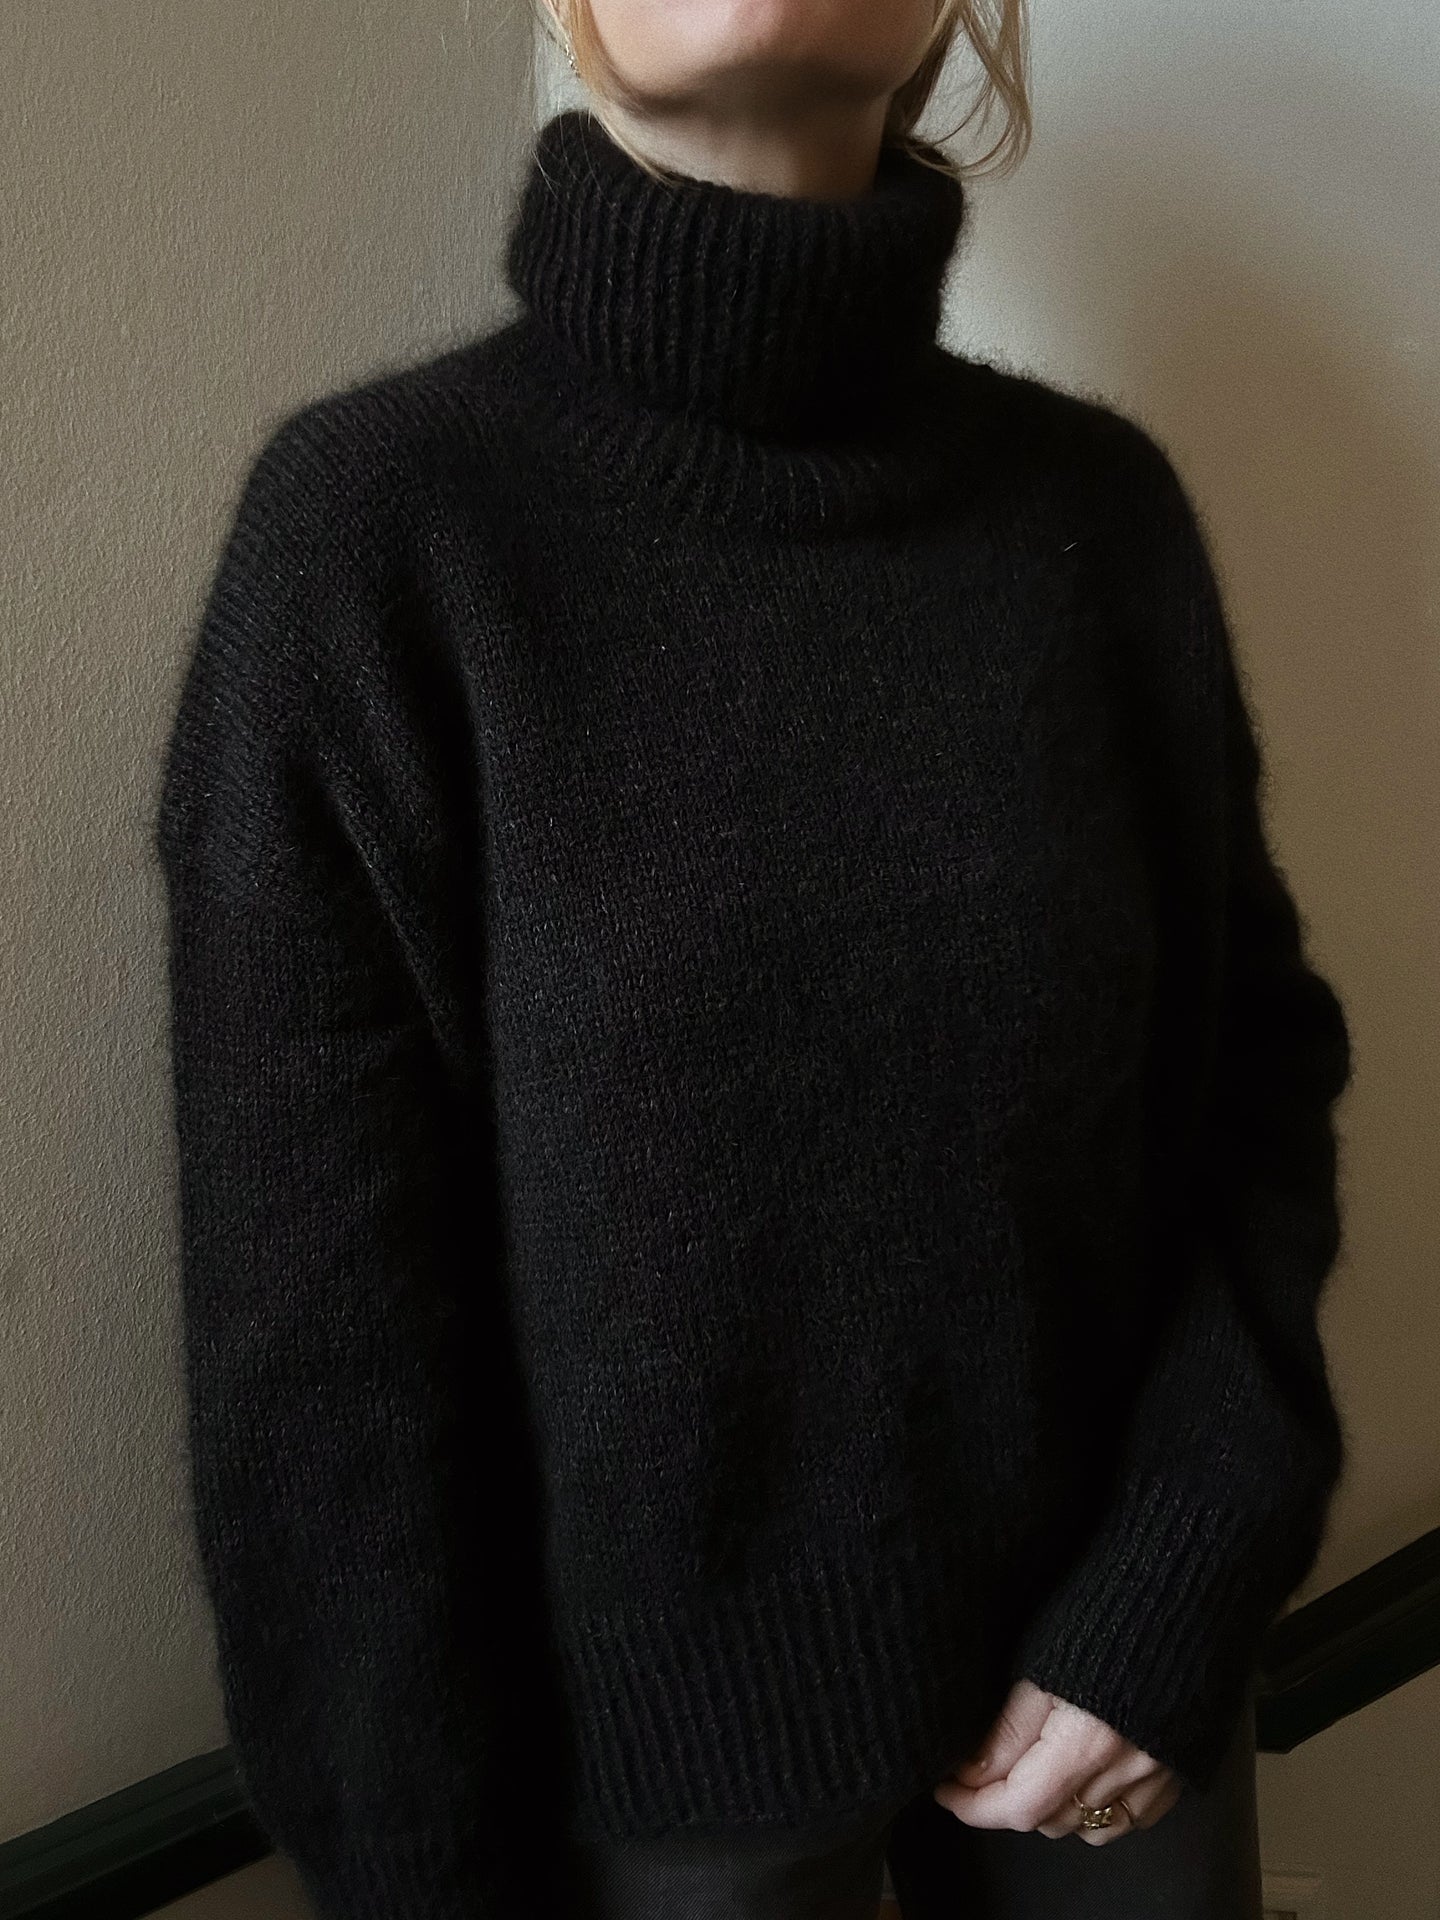 Sweater No. 11 light - ENGLISH